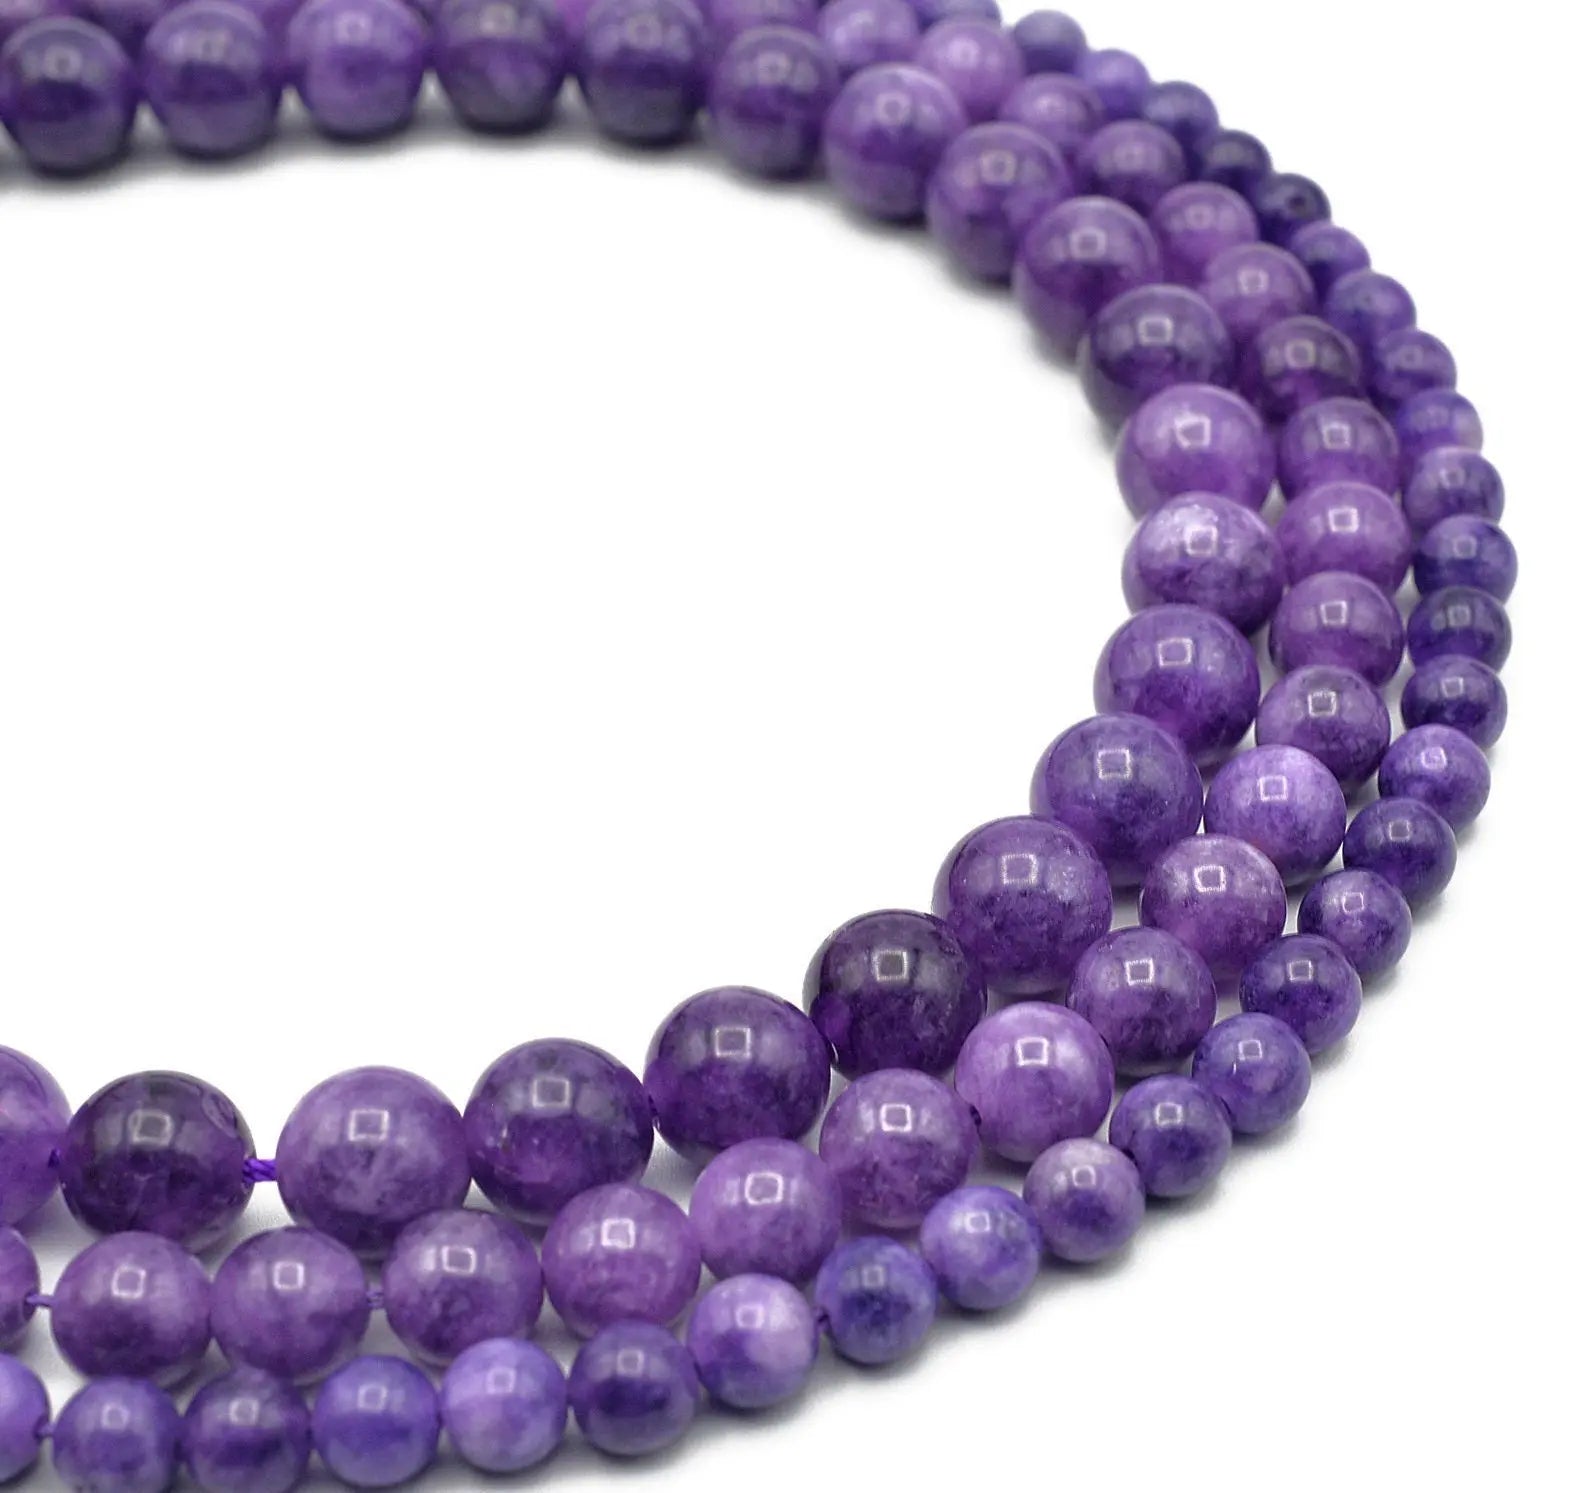 Purple lepidolite stone beads gemstone aaa quality 15" strand round 6mm,8mm,10mm natural stones bead healing chakra stone for jewelry making - BeadsFindingDepot